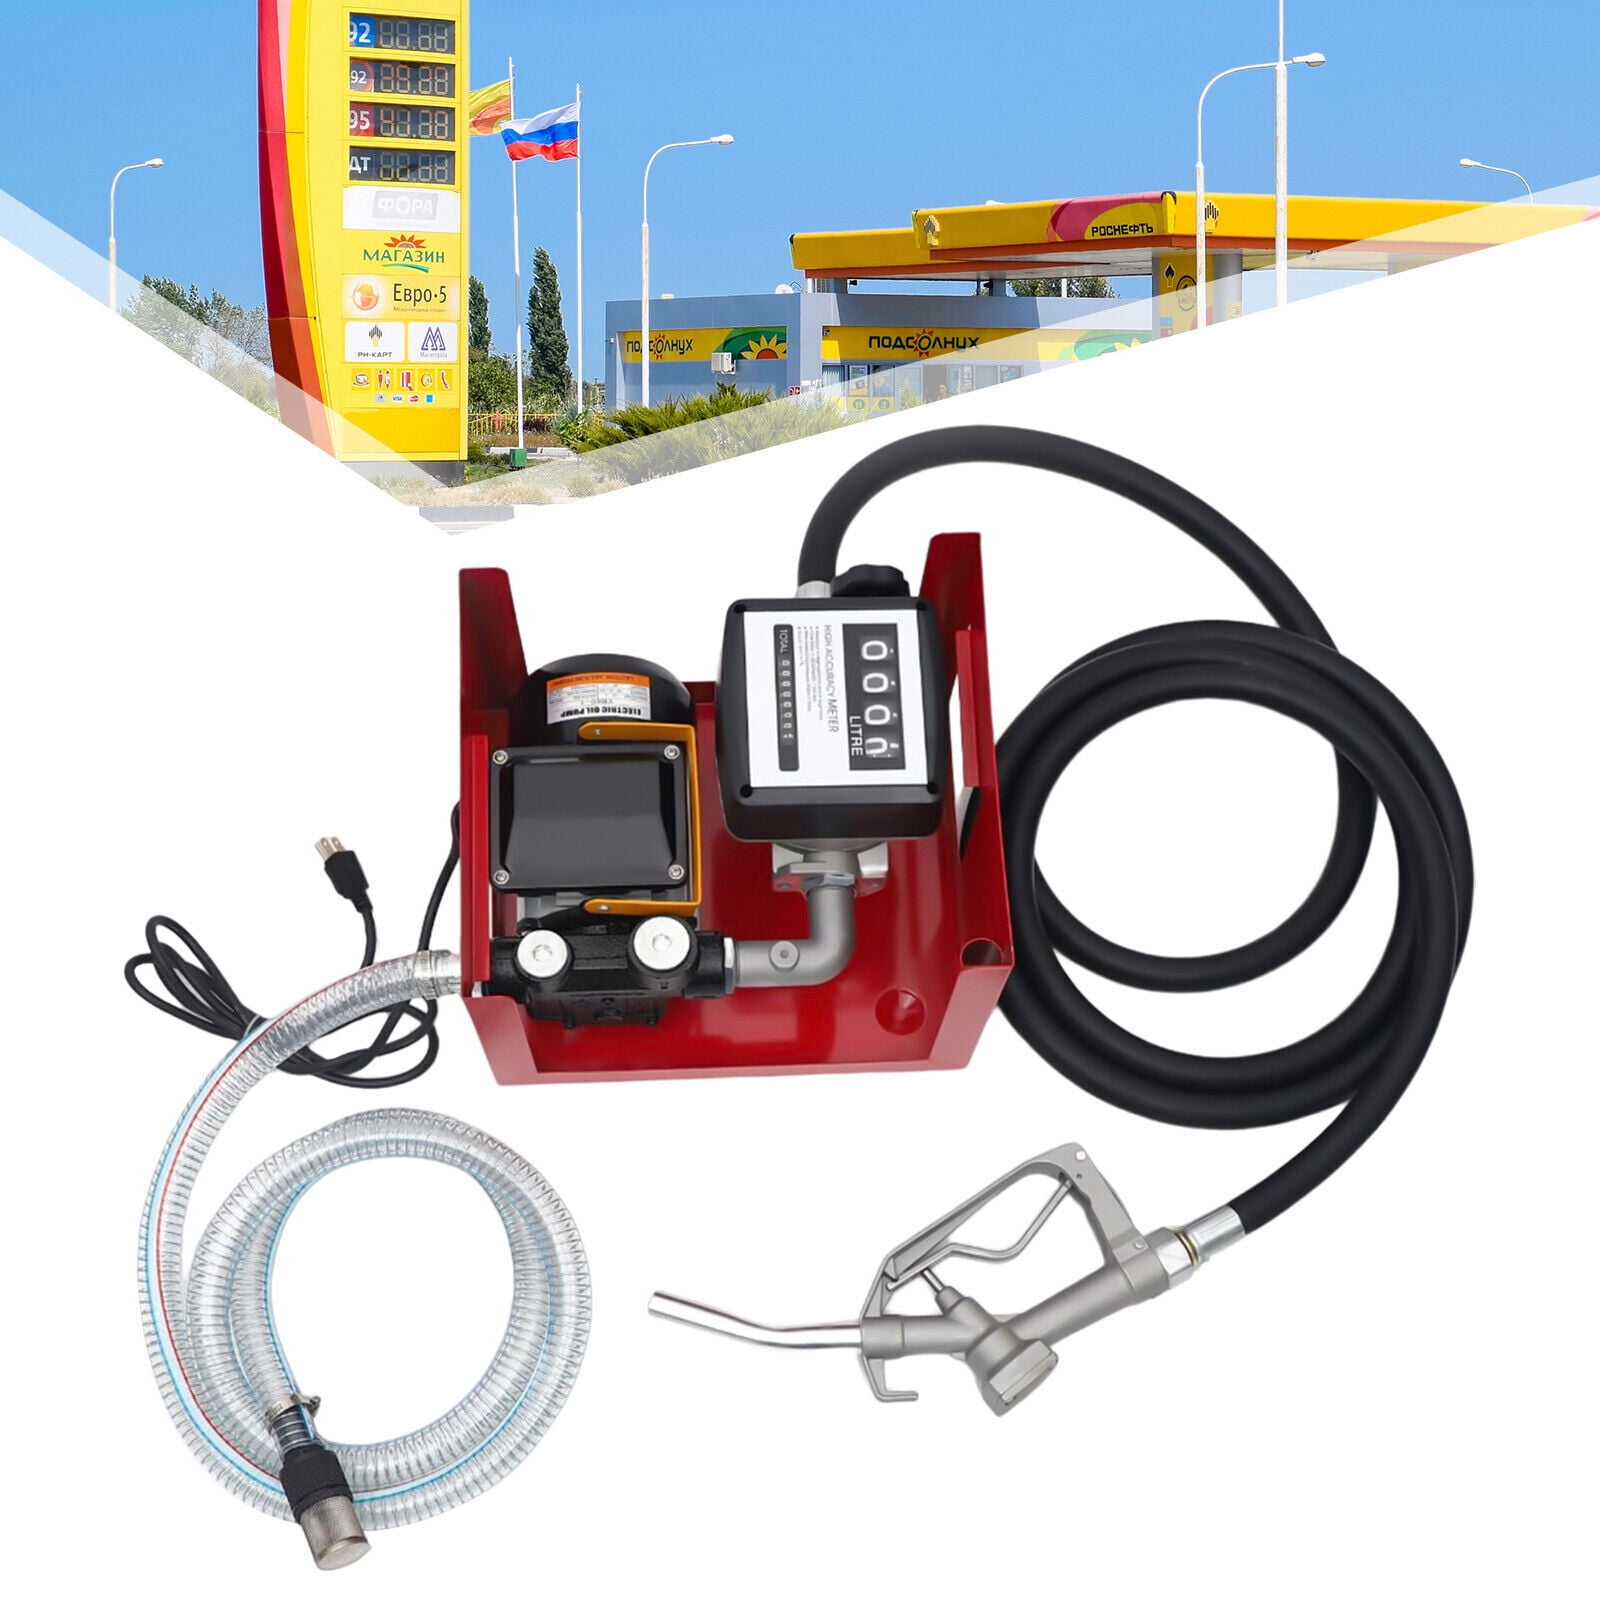 BENTISM Diesel Fuel Transfer Pump Kit,10 GPM12V DC Fuel Transfer